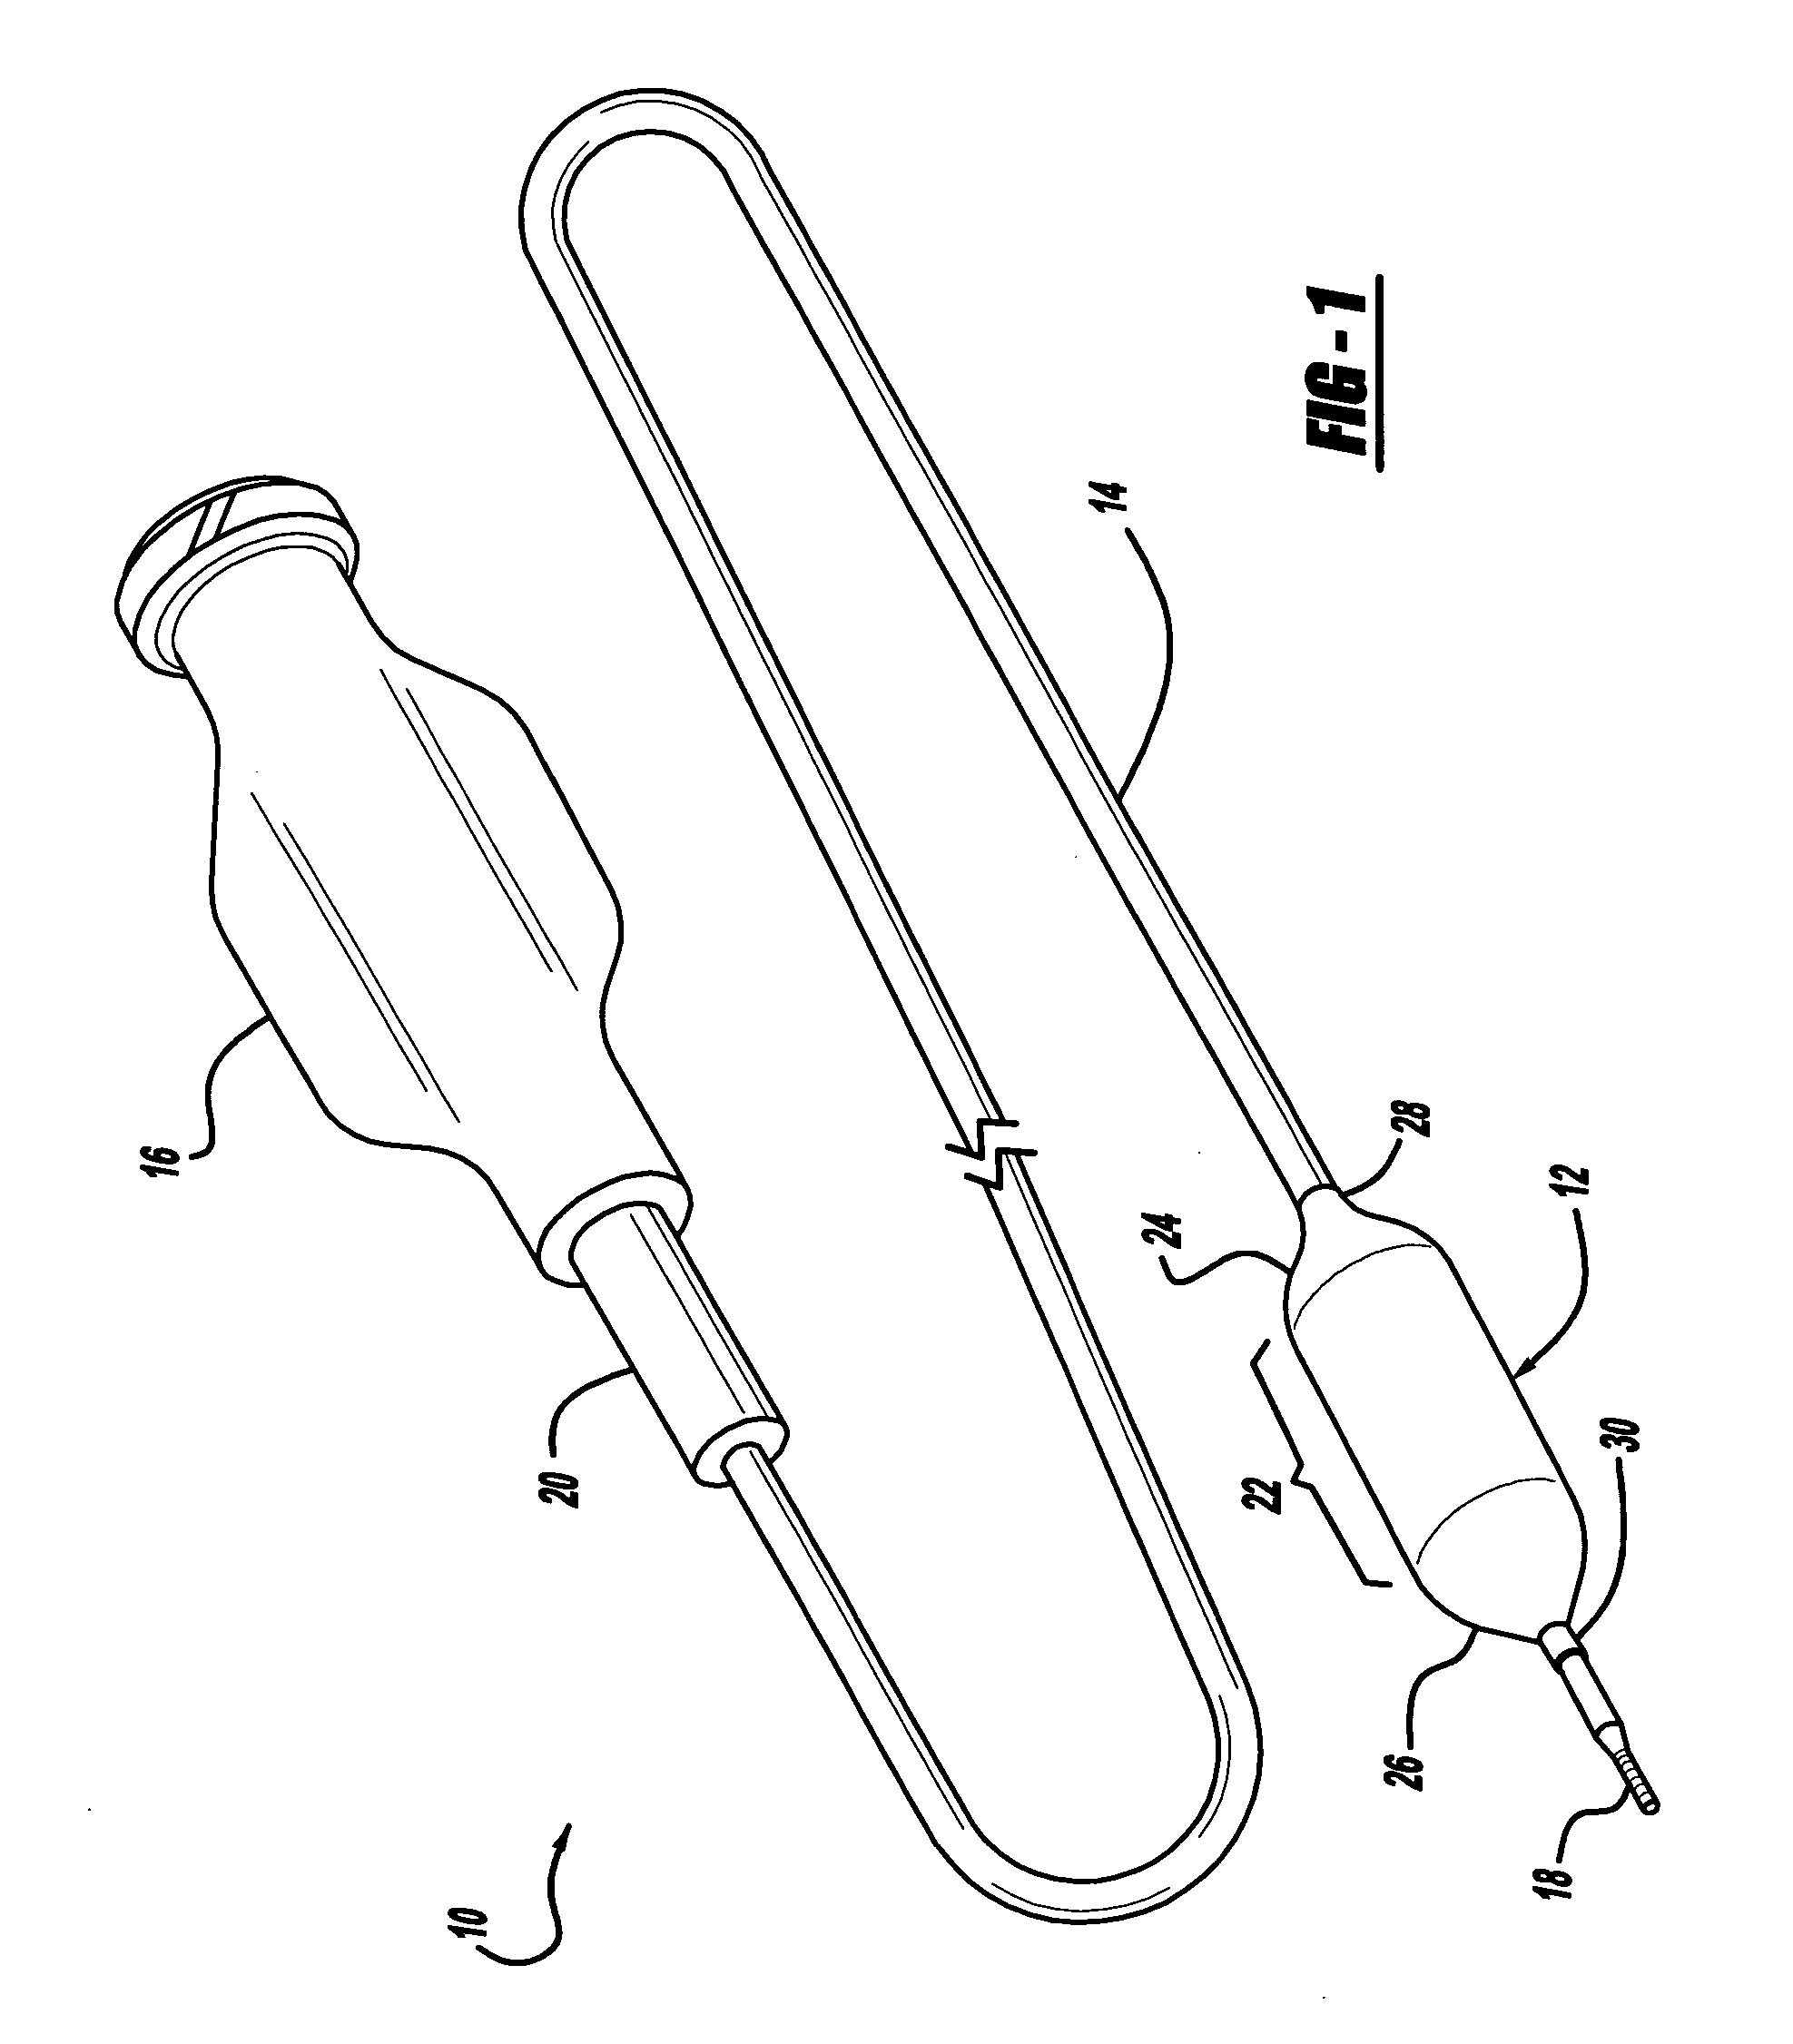 Esophageal balloon catheter with asymmetrical balloon